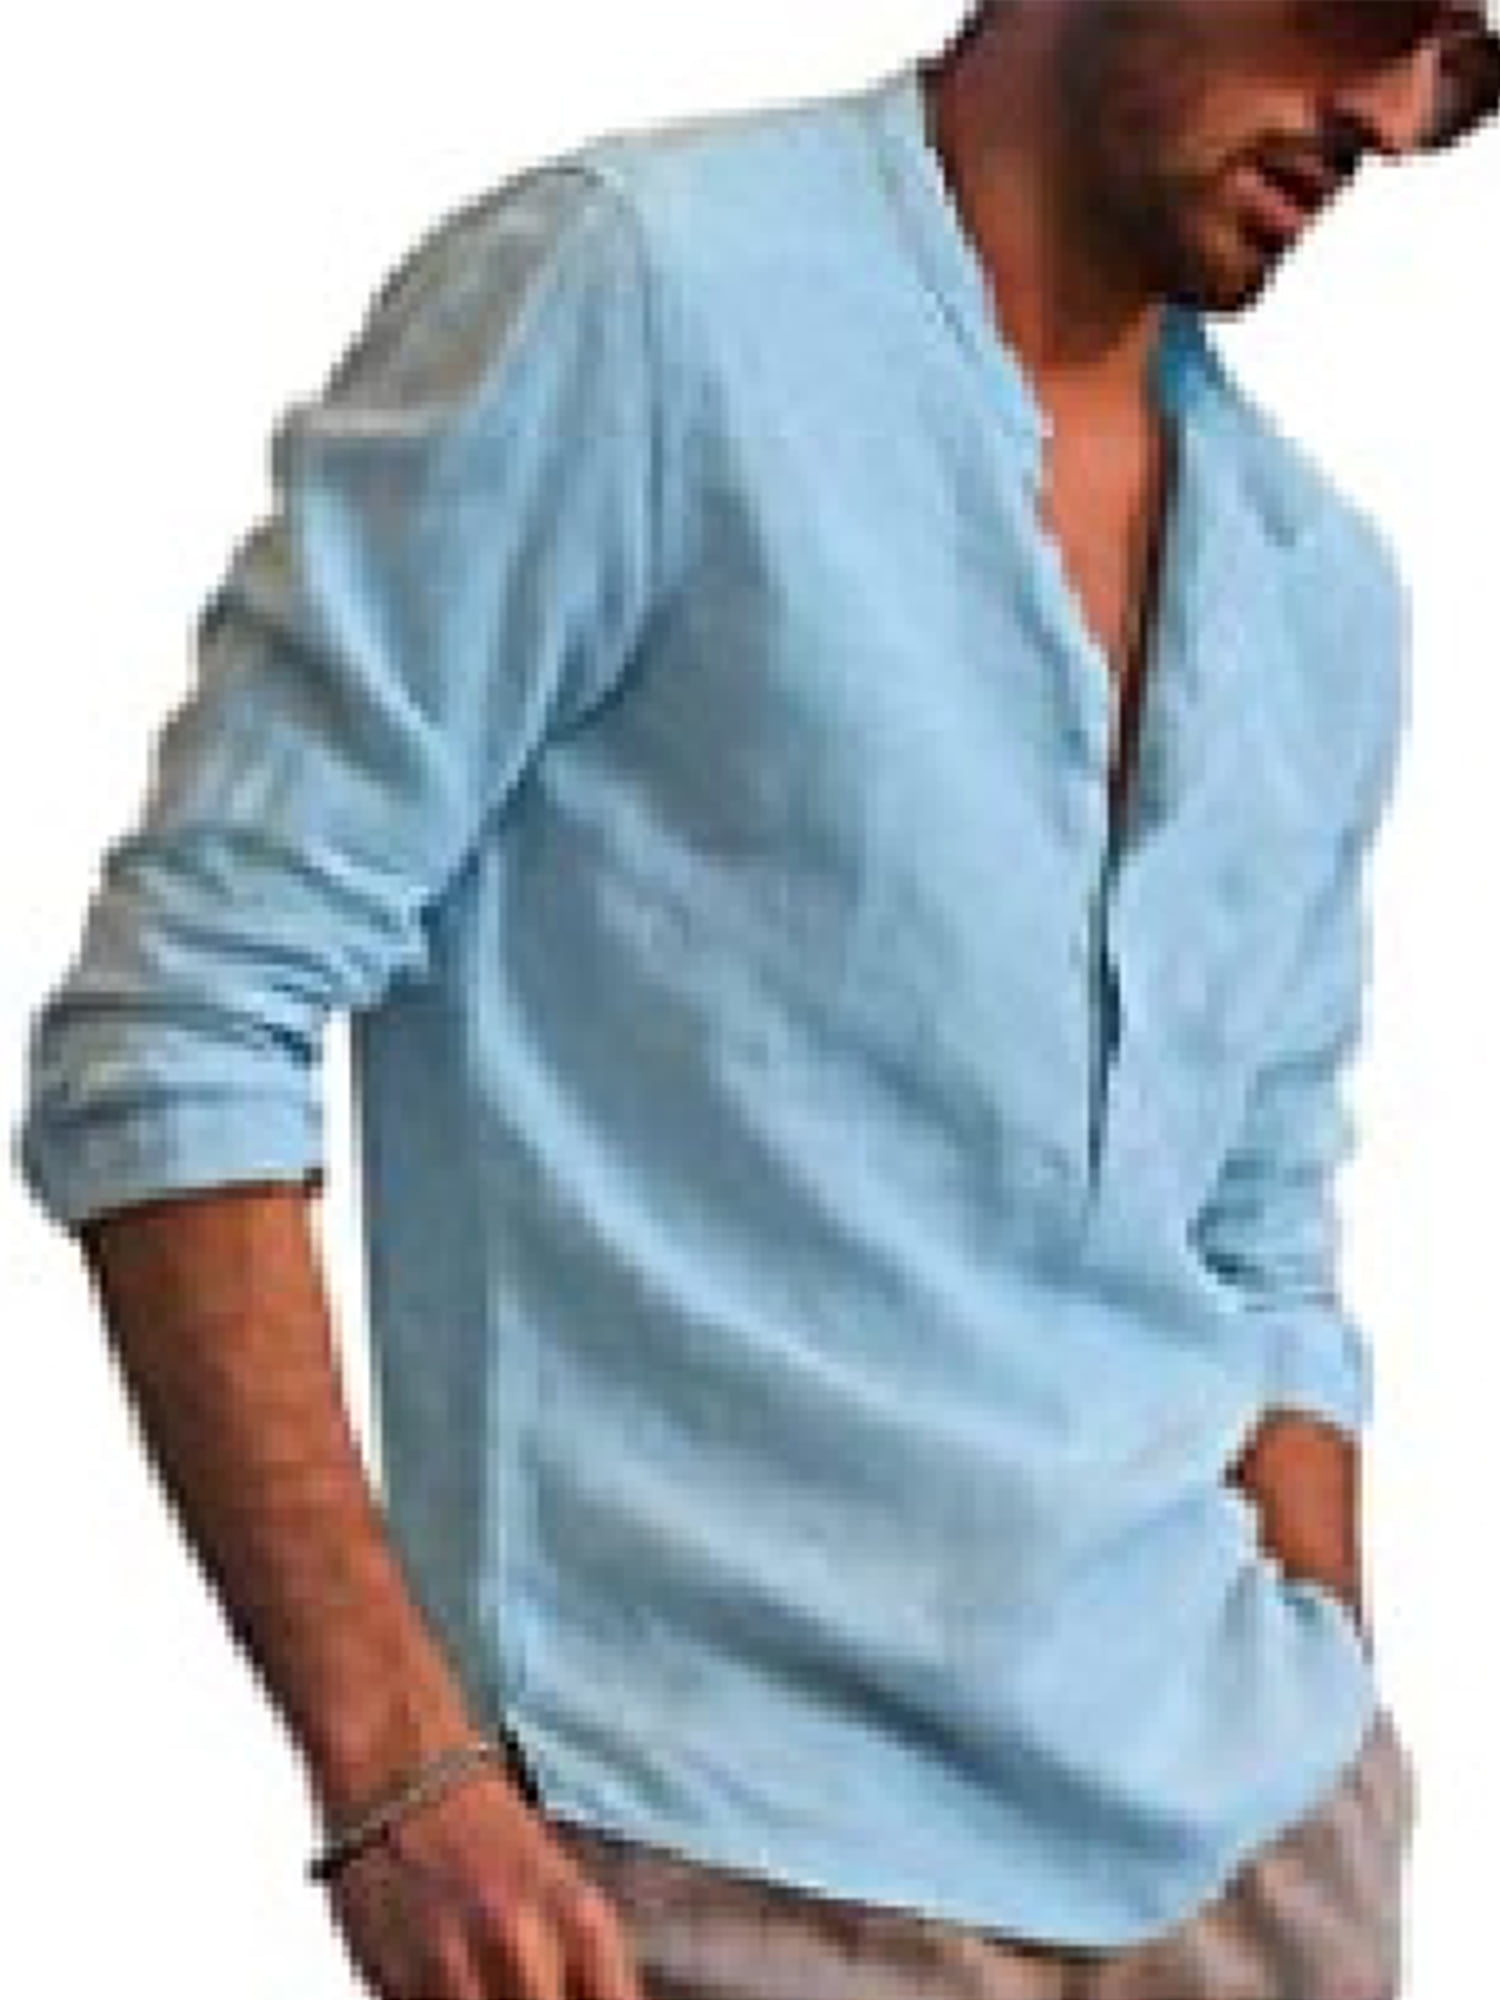 Men's Casual Linen Cotton Shirts Vintage Long Sleeve Yoga Blouse Tops T-shirt